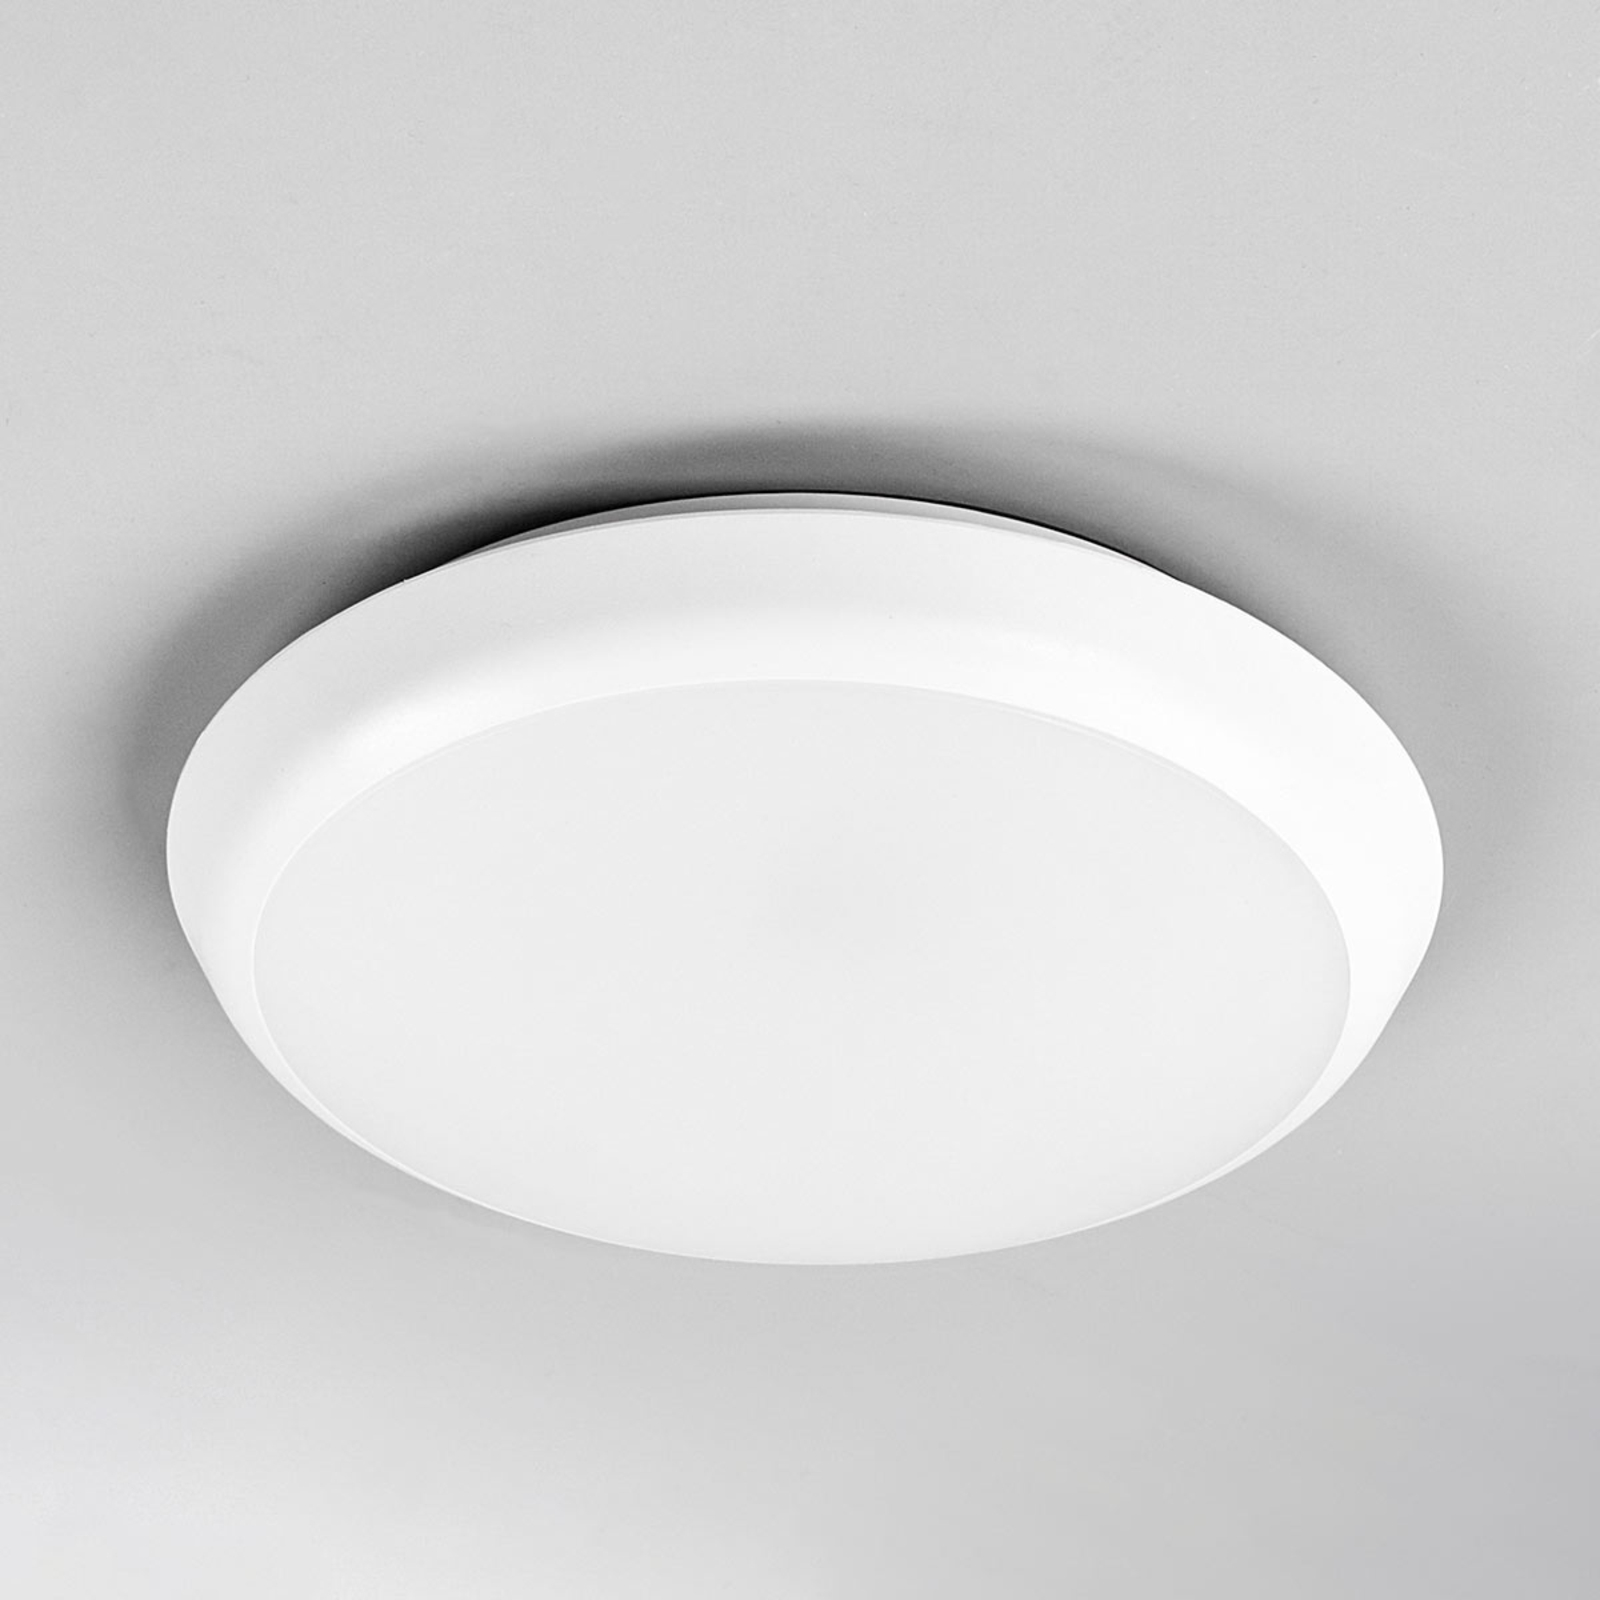 Plafón LED Augustin con forma redonda, 20 cm